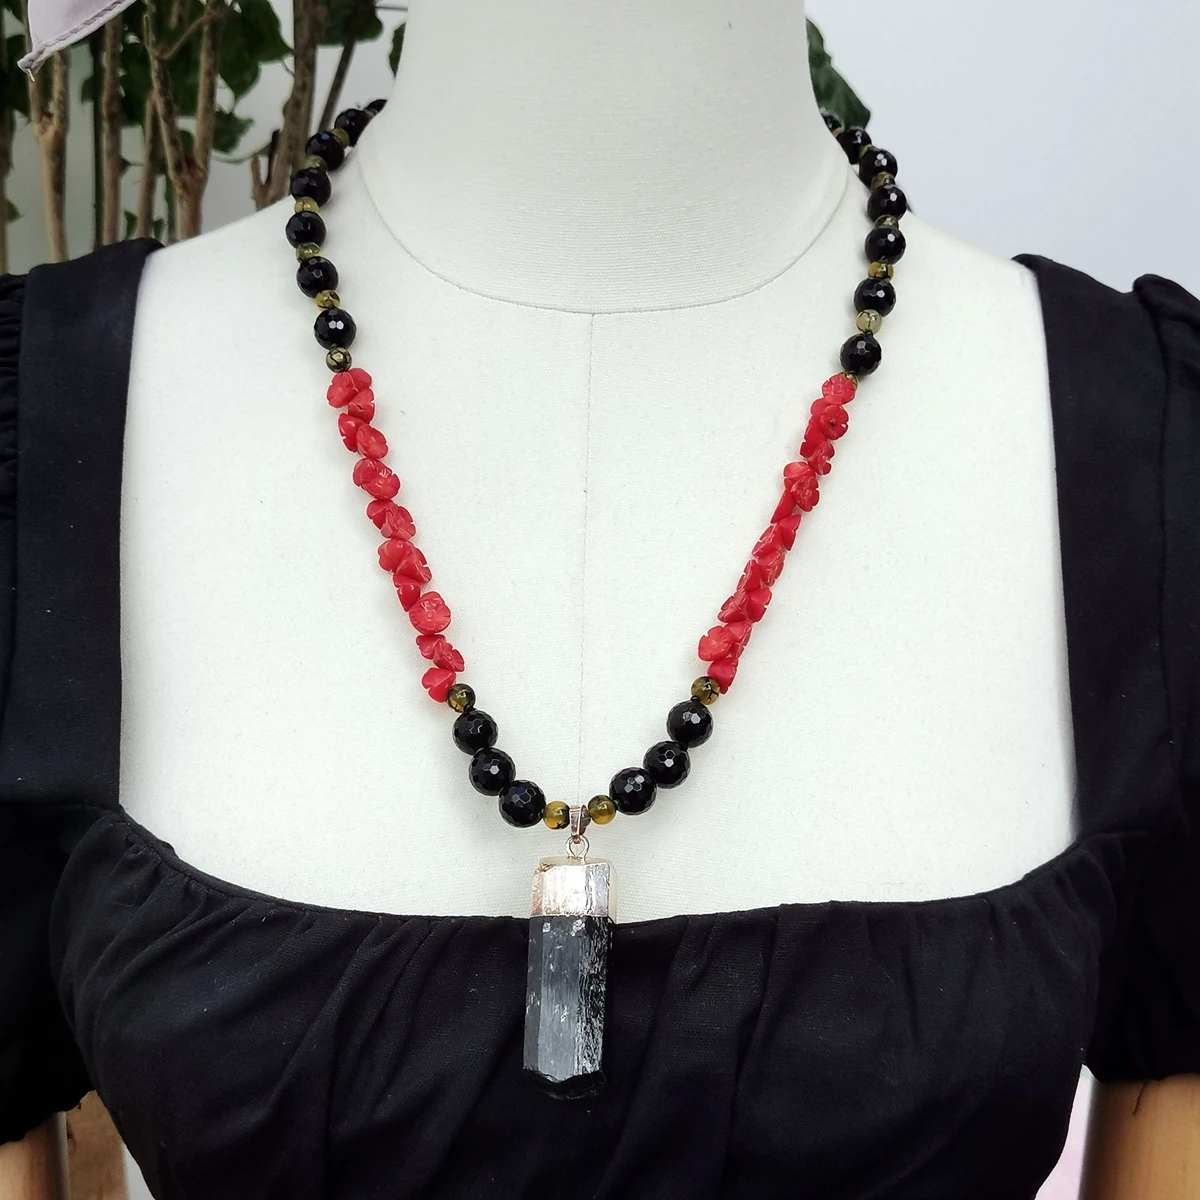 

Lii Ji Black Onyx Agate Red Coral Black Tourmaline Pendant Necklace 65cm Women Necklace Jewelry Stock Sale